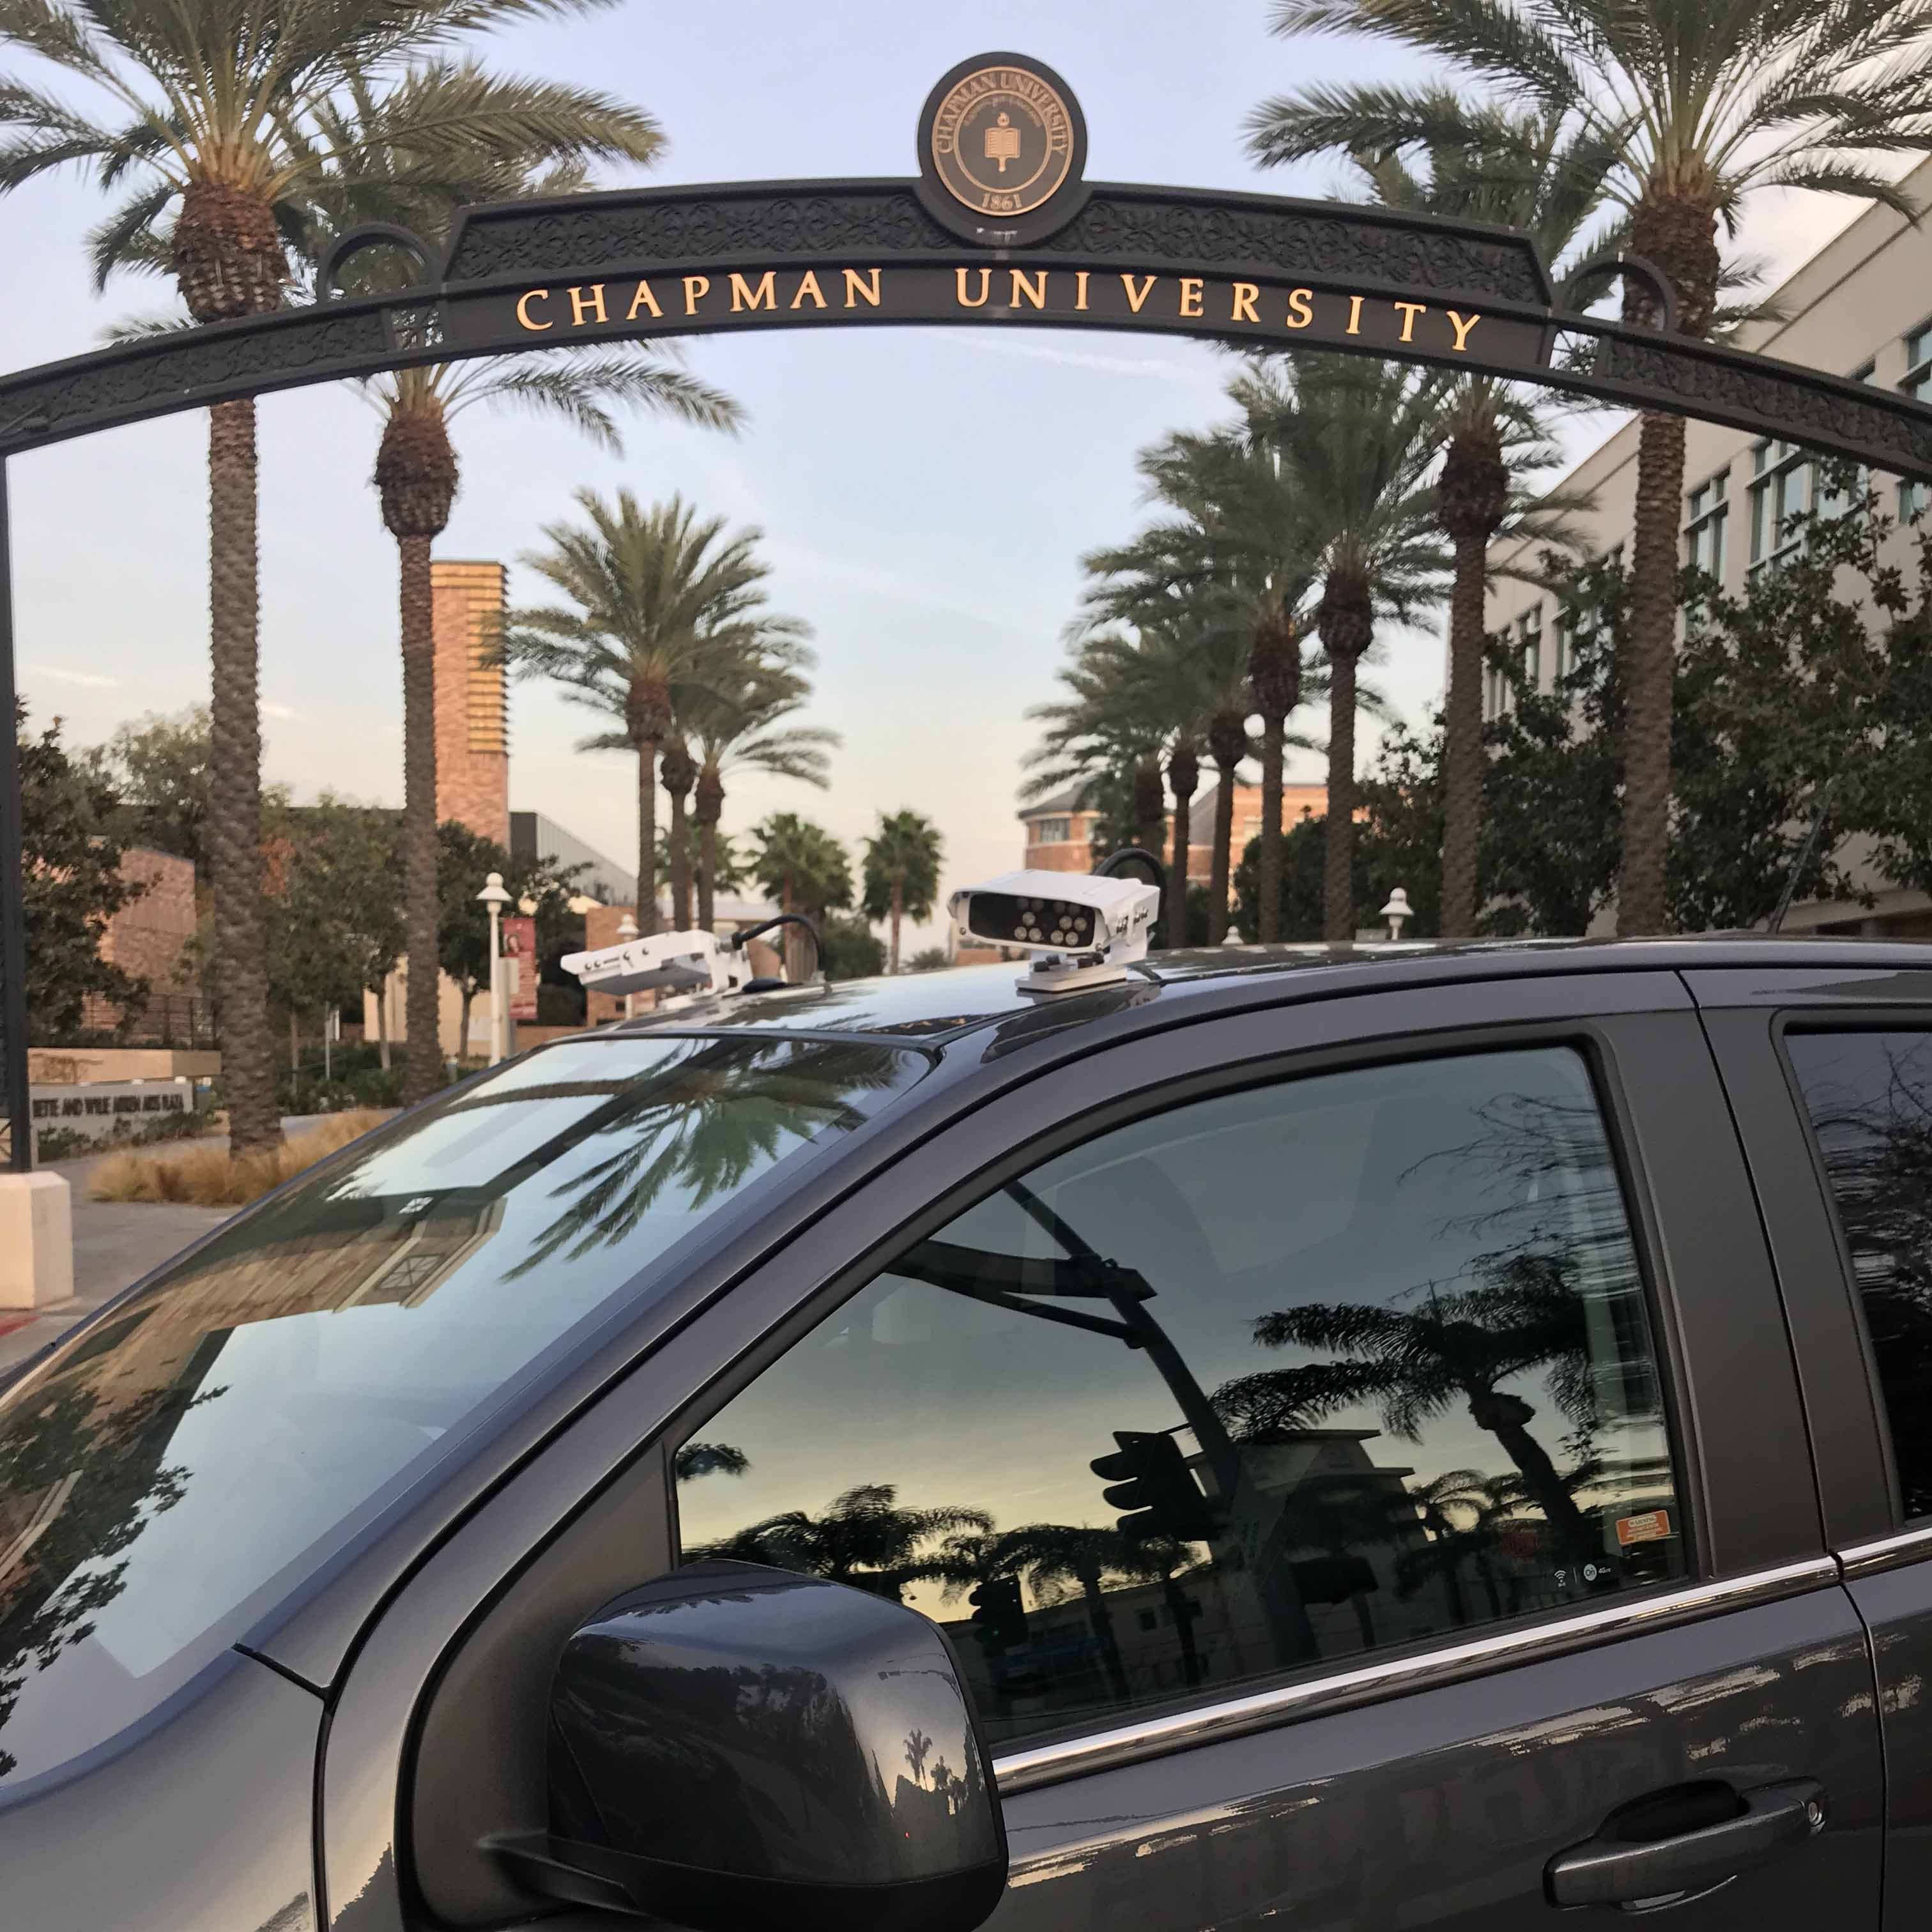 Chapman parking enforcement vehicle in front of university sign